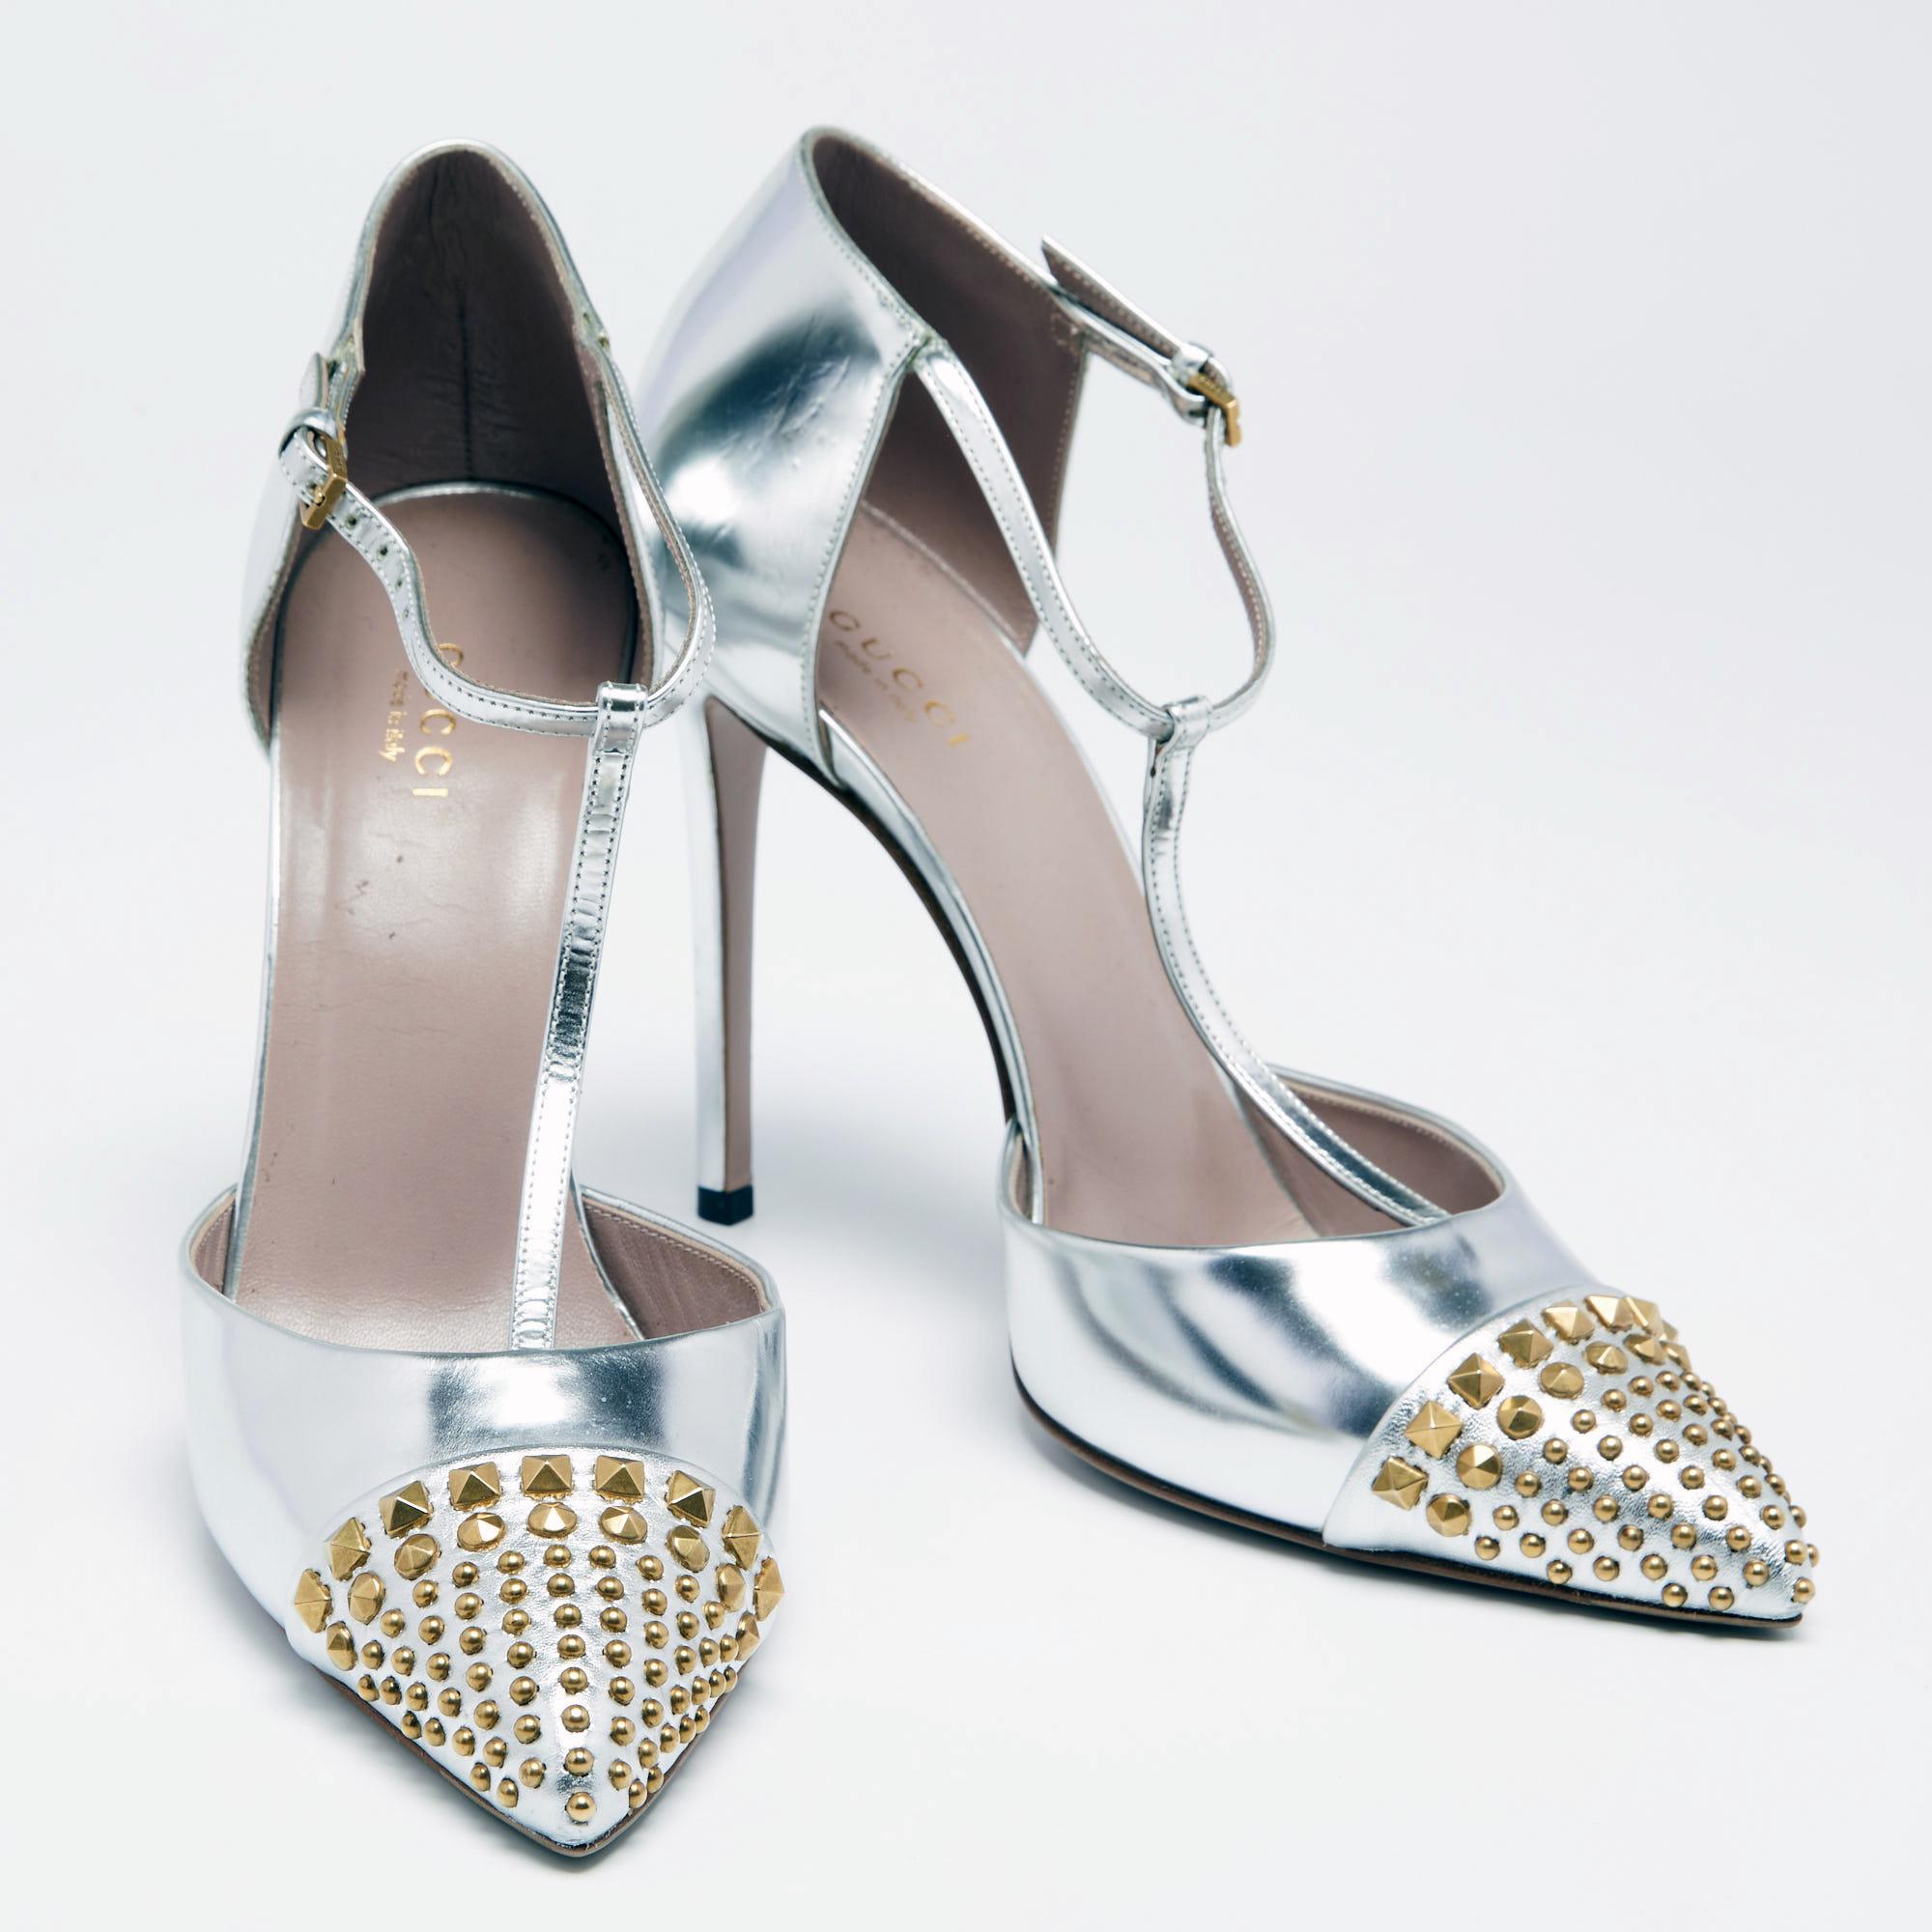 silver gucci heels